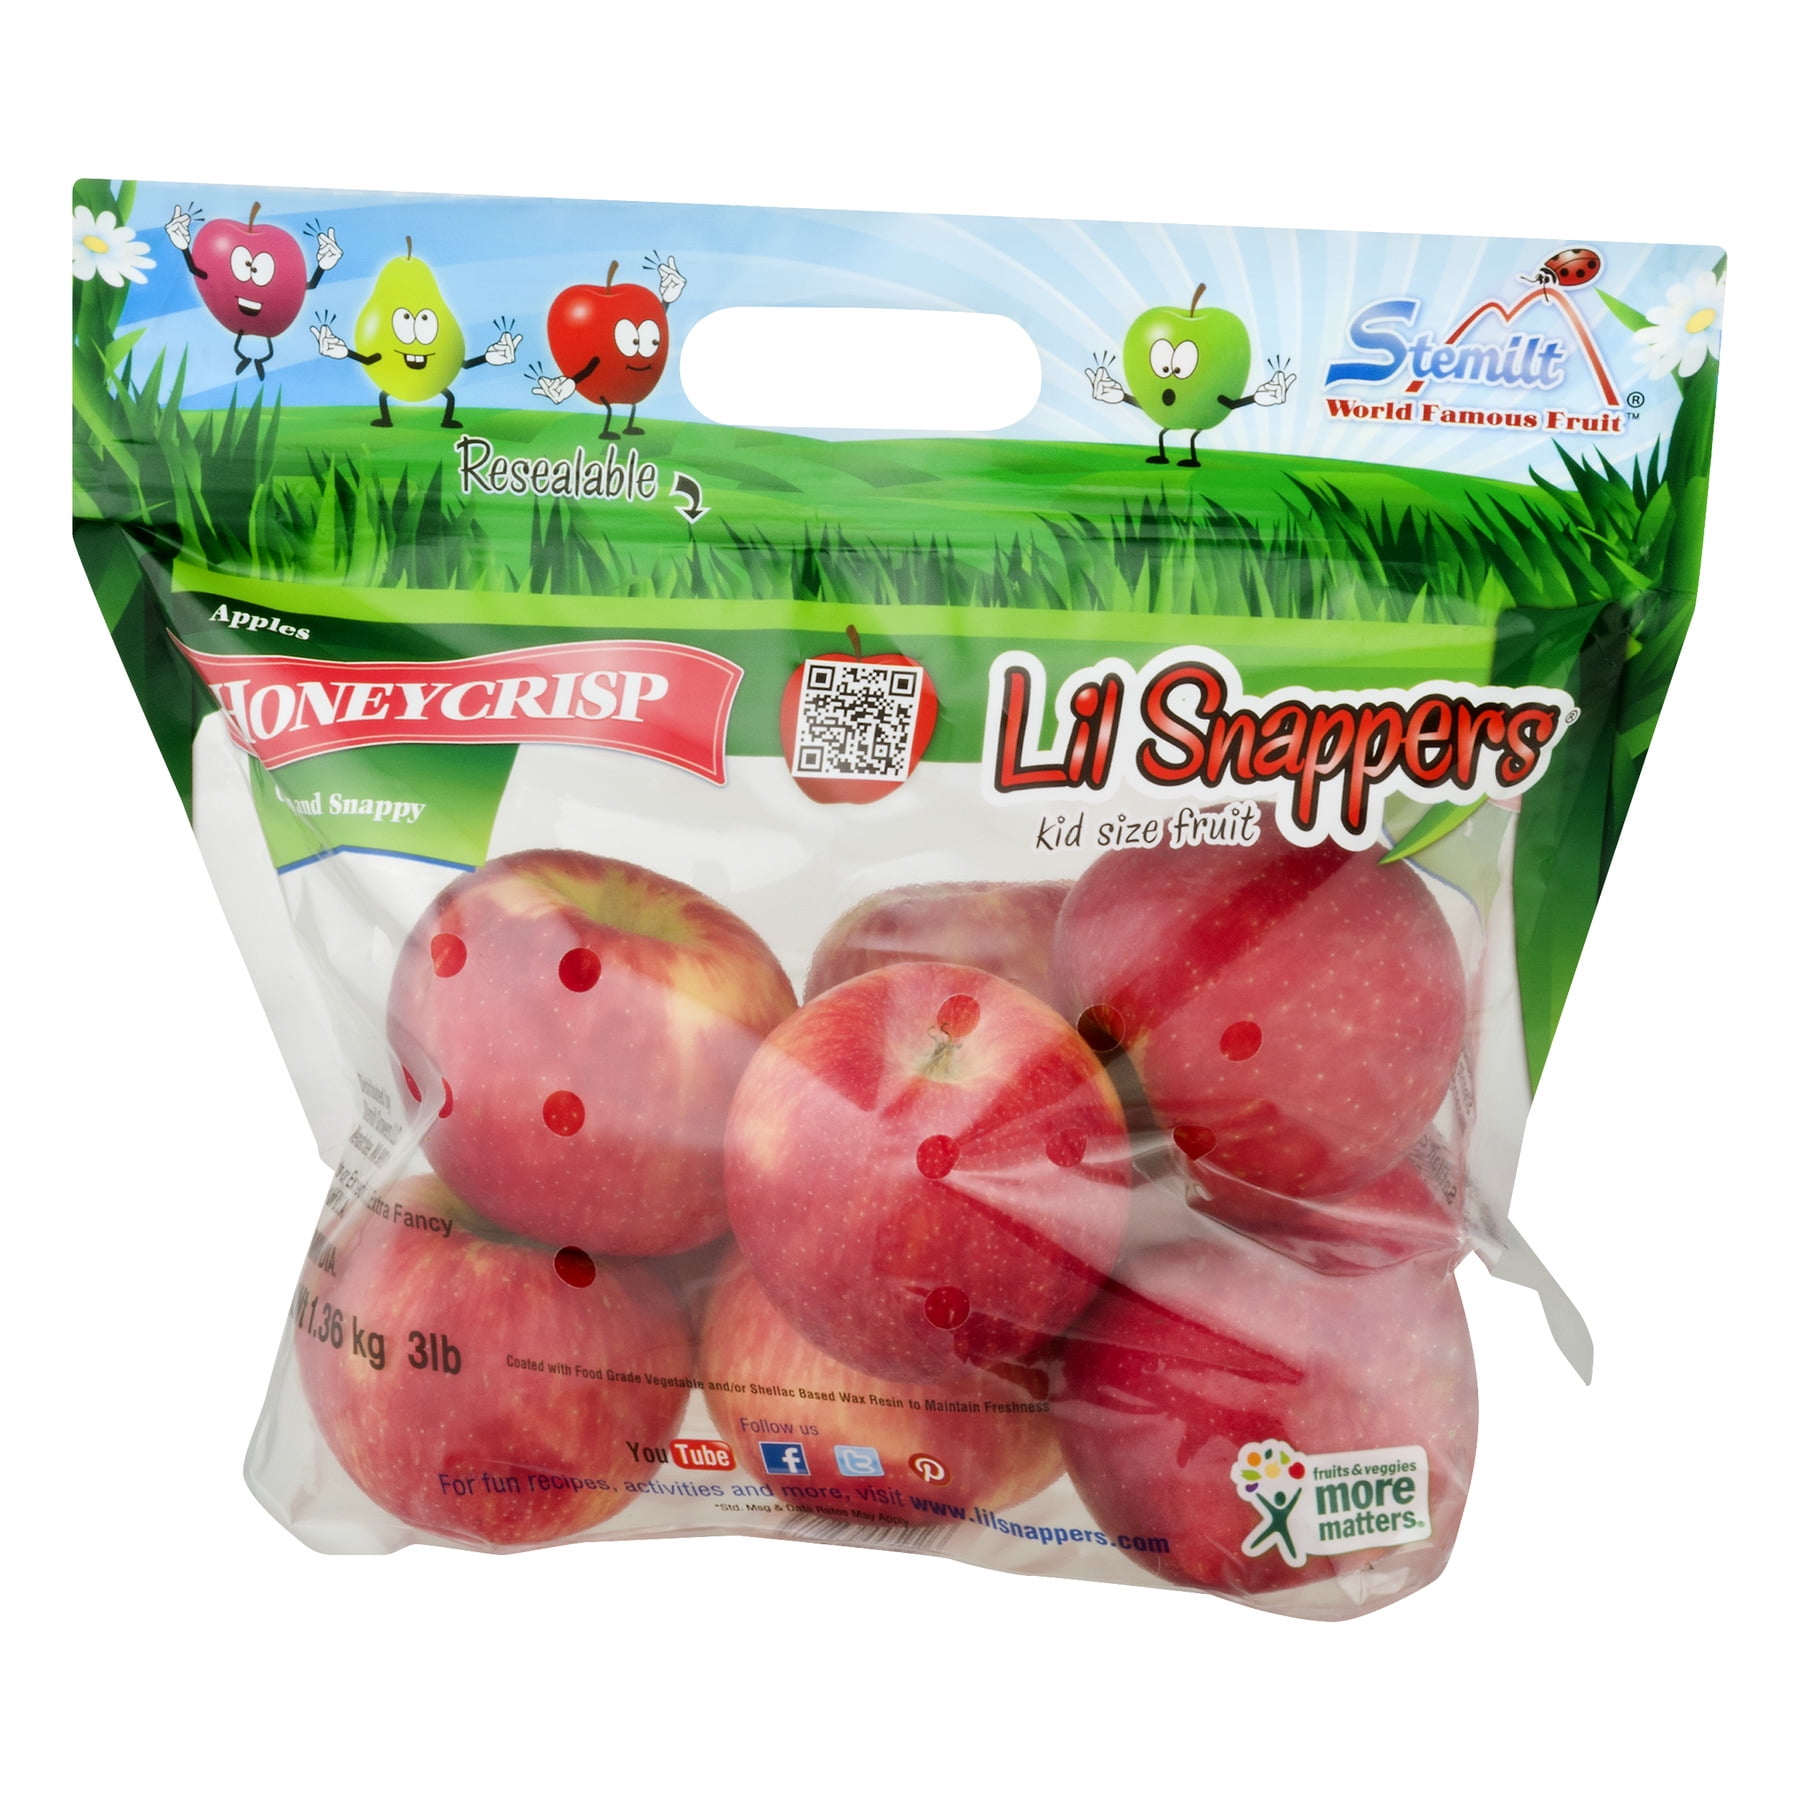 Stemilt World Famous Fruit Organic Cosmic Crisp Apple Punnet, 4 Count, Shop Online, Shopping List, Digital Coupons